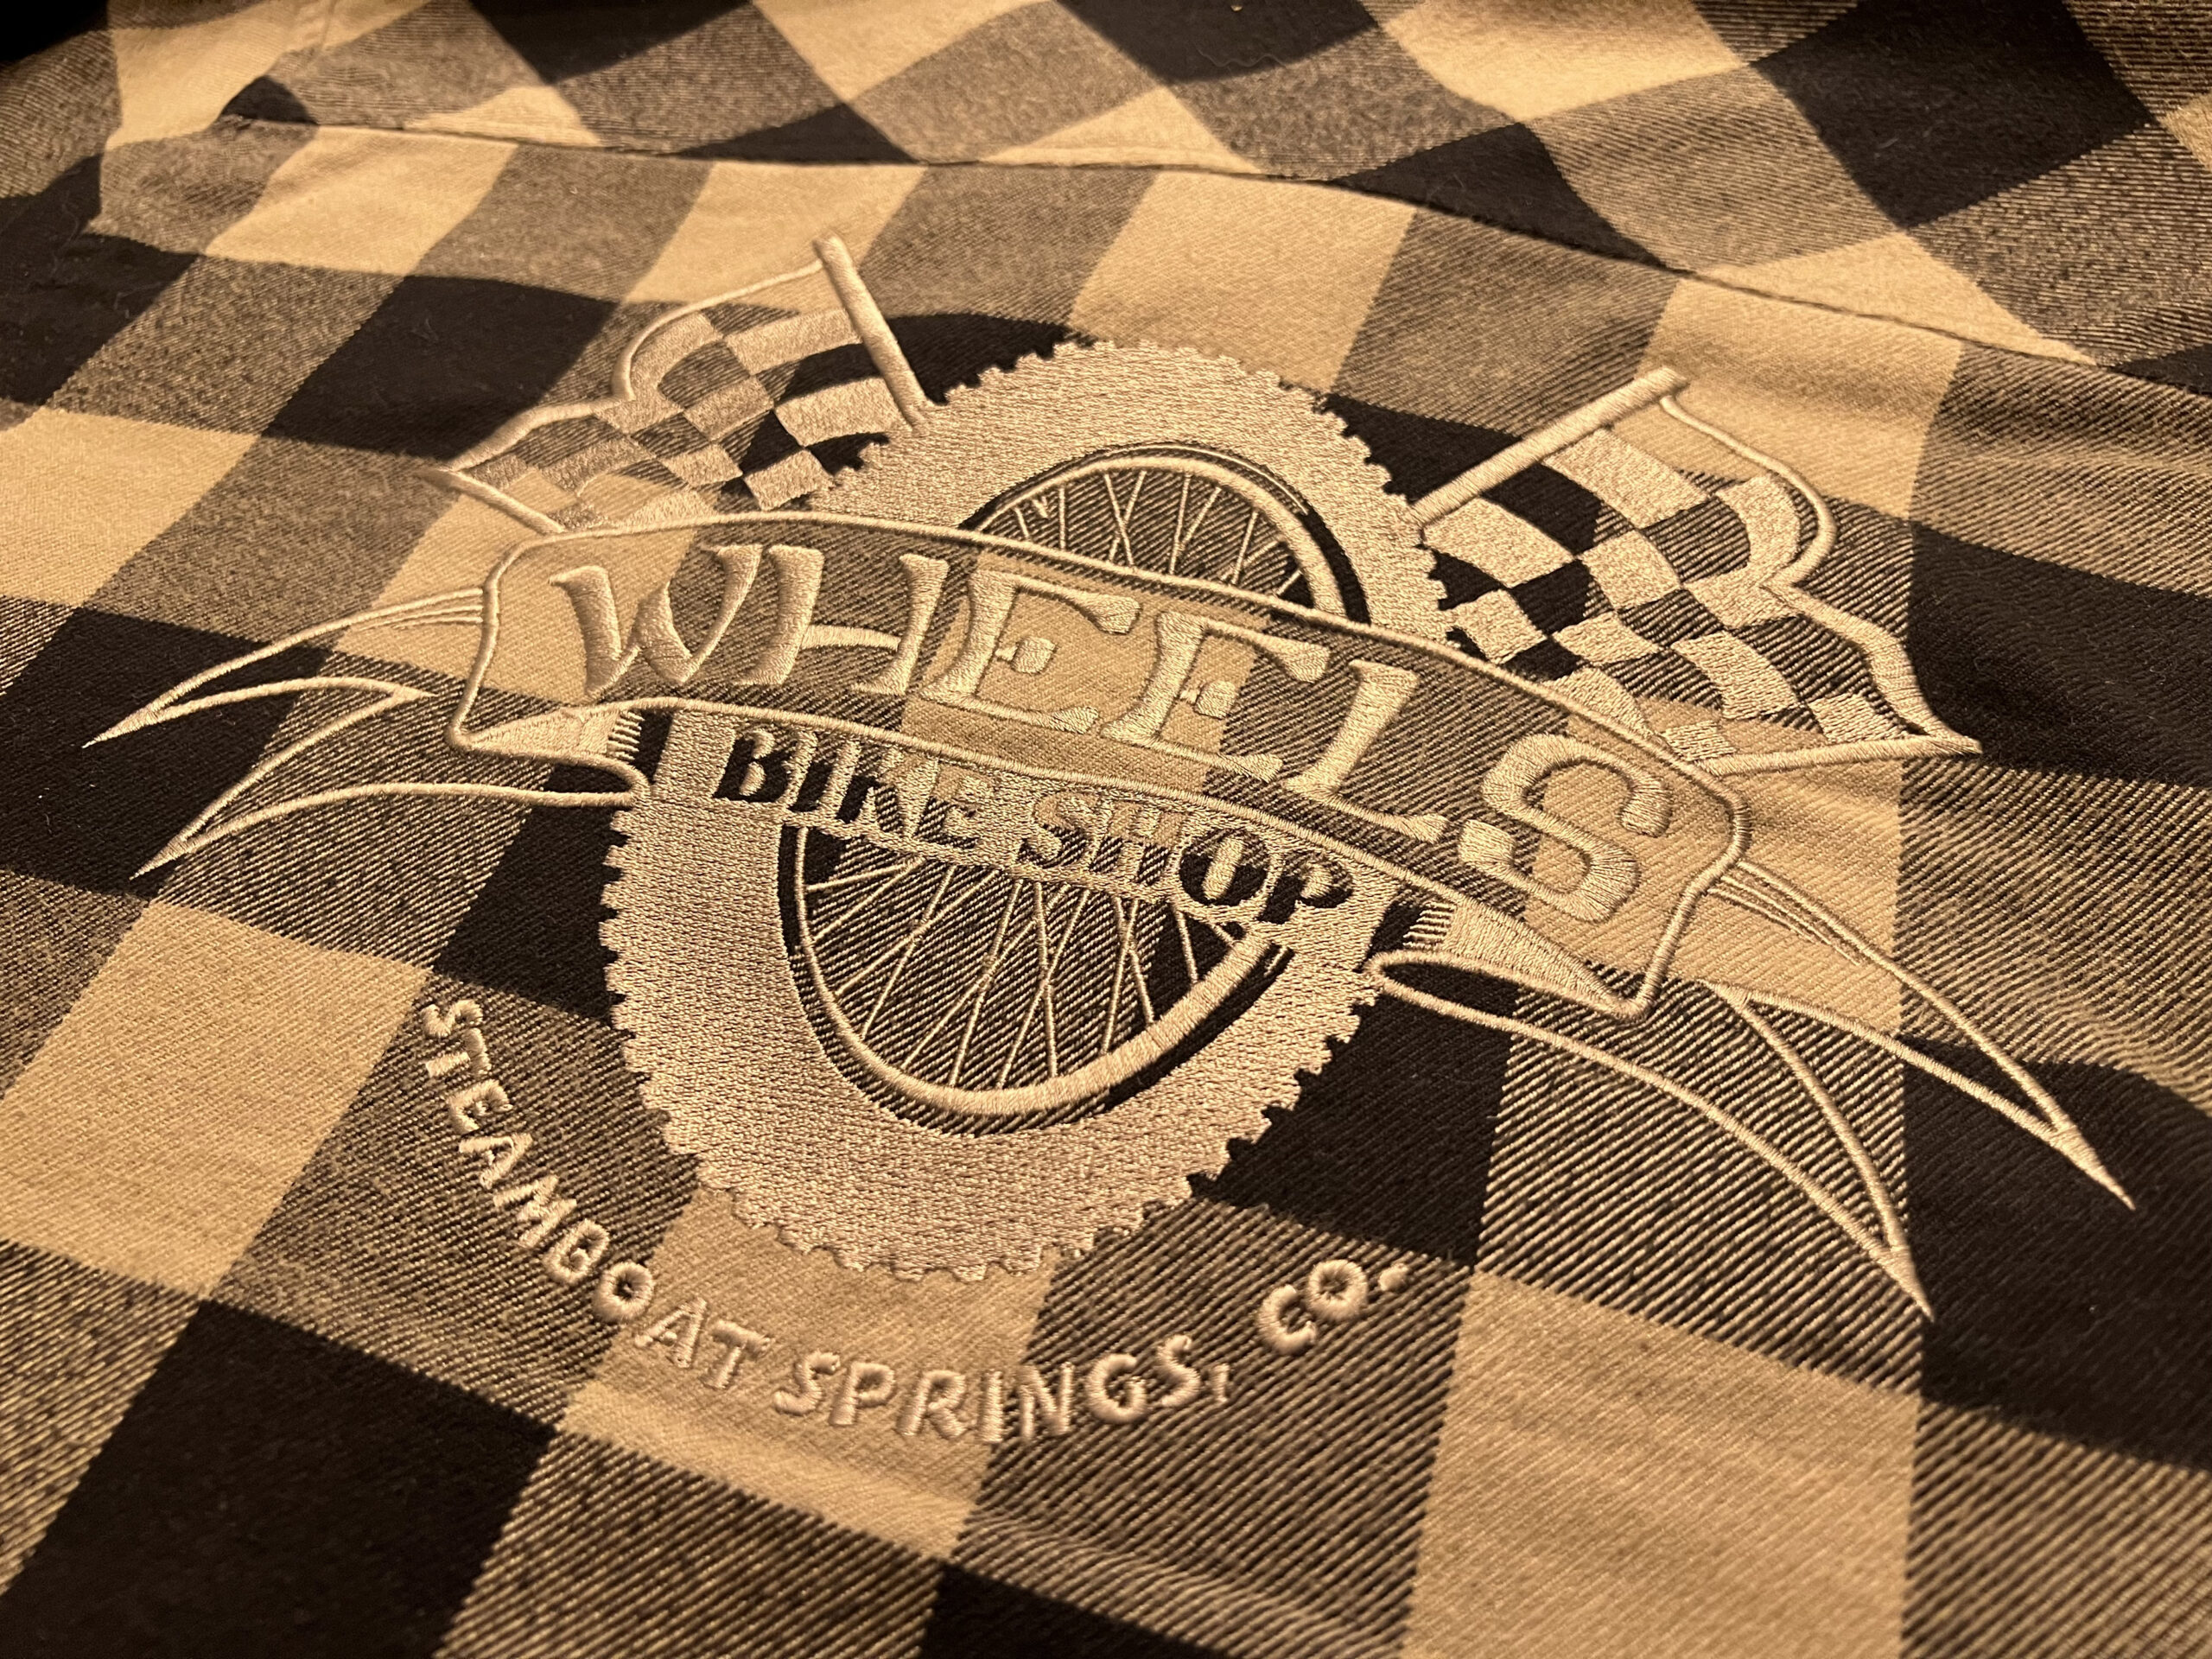 Wheels Bike Shop of Steamboat Springs CO. custom embroidered flannels